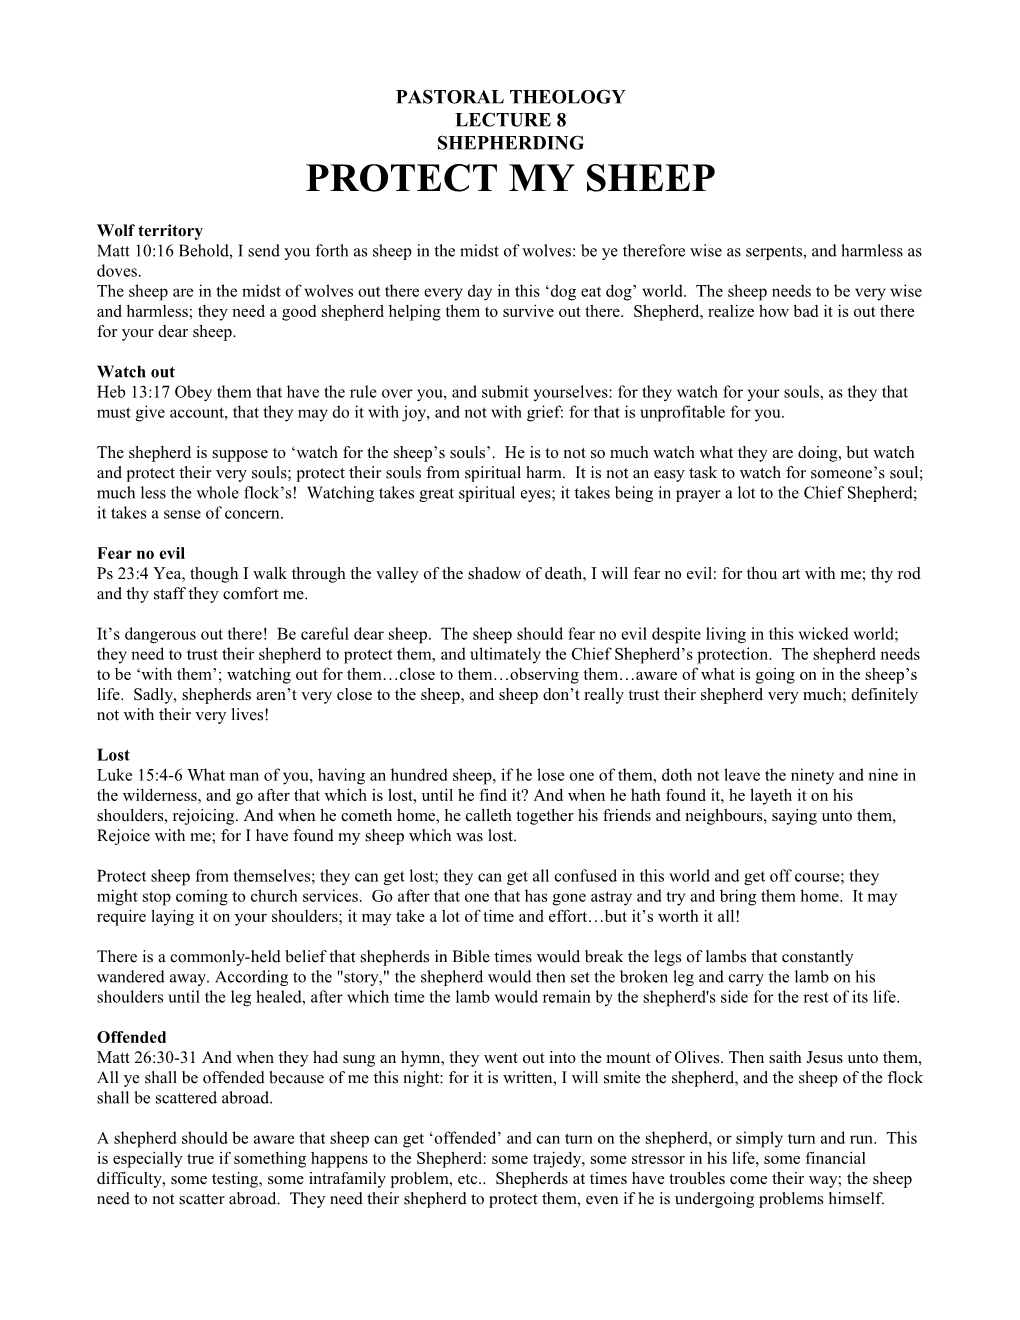 Protect My Sheep